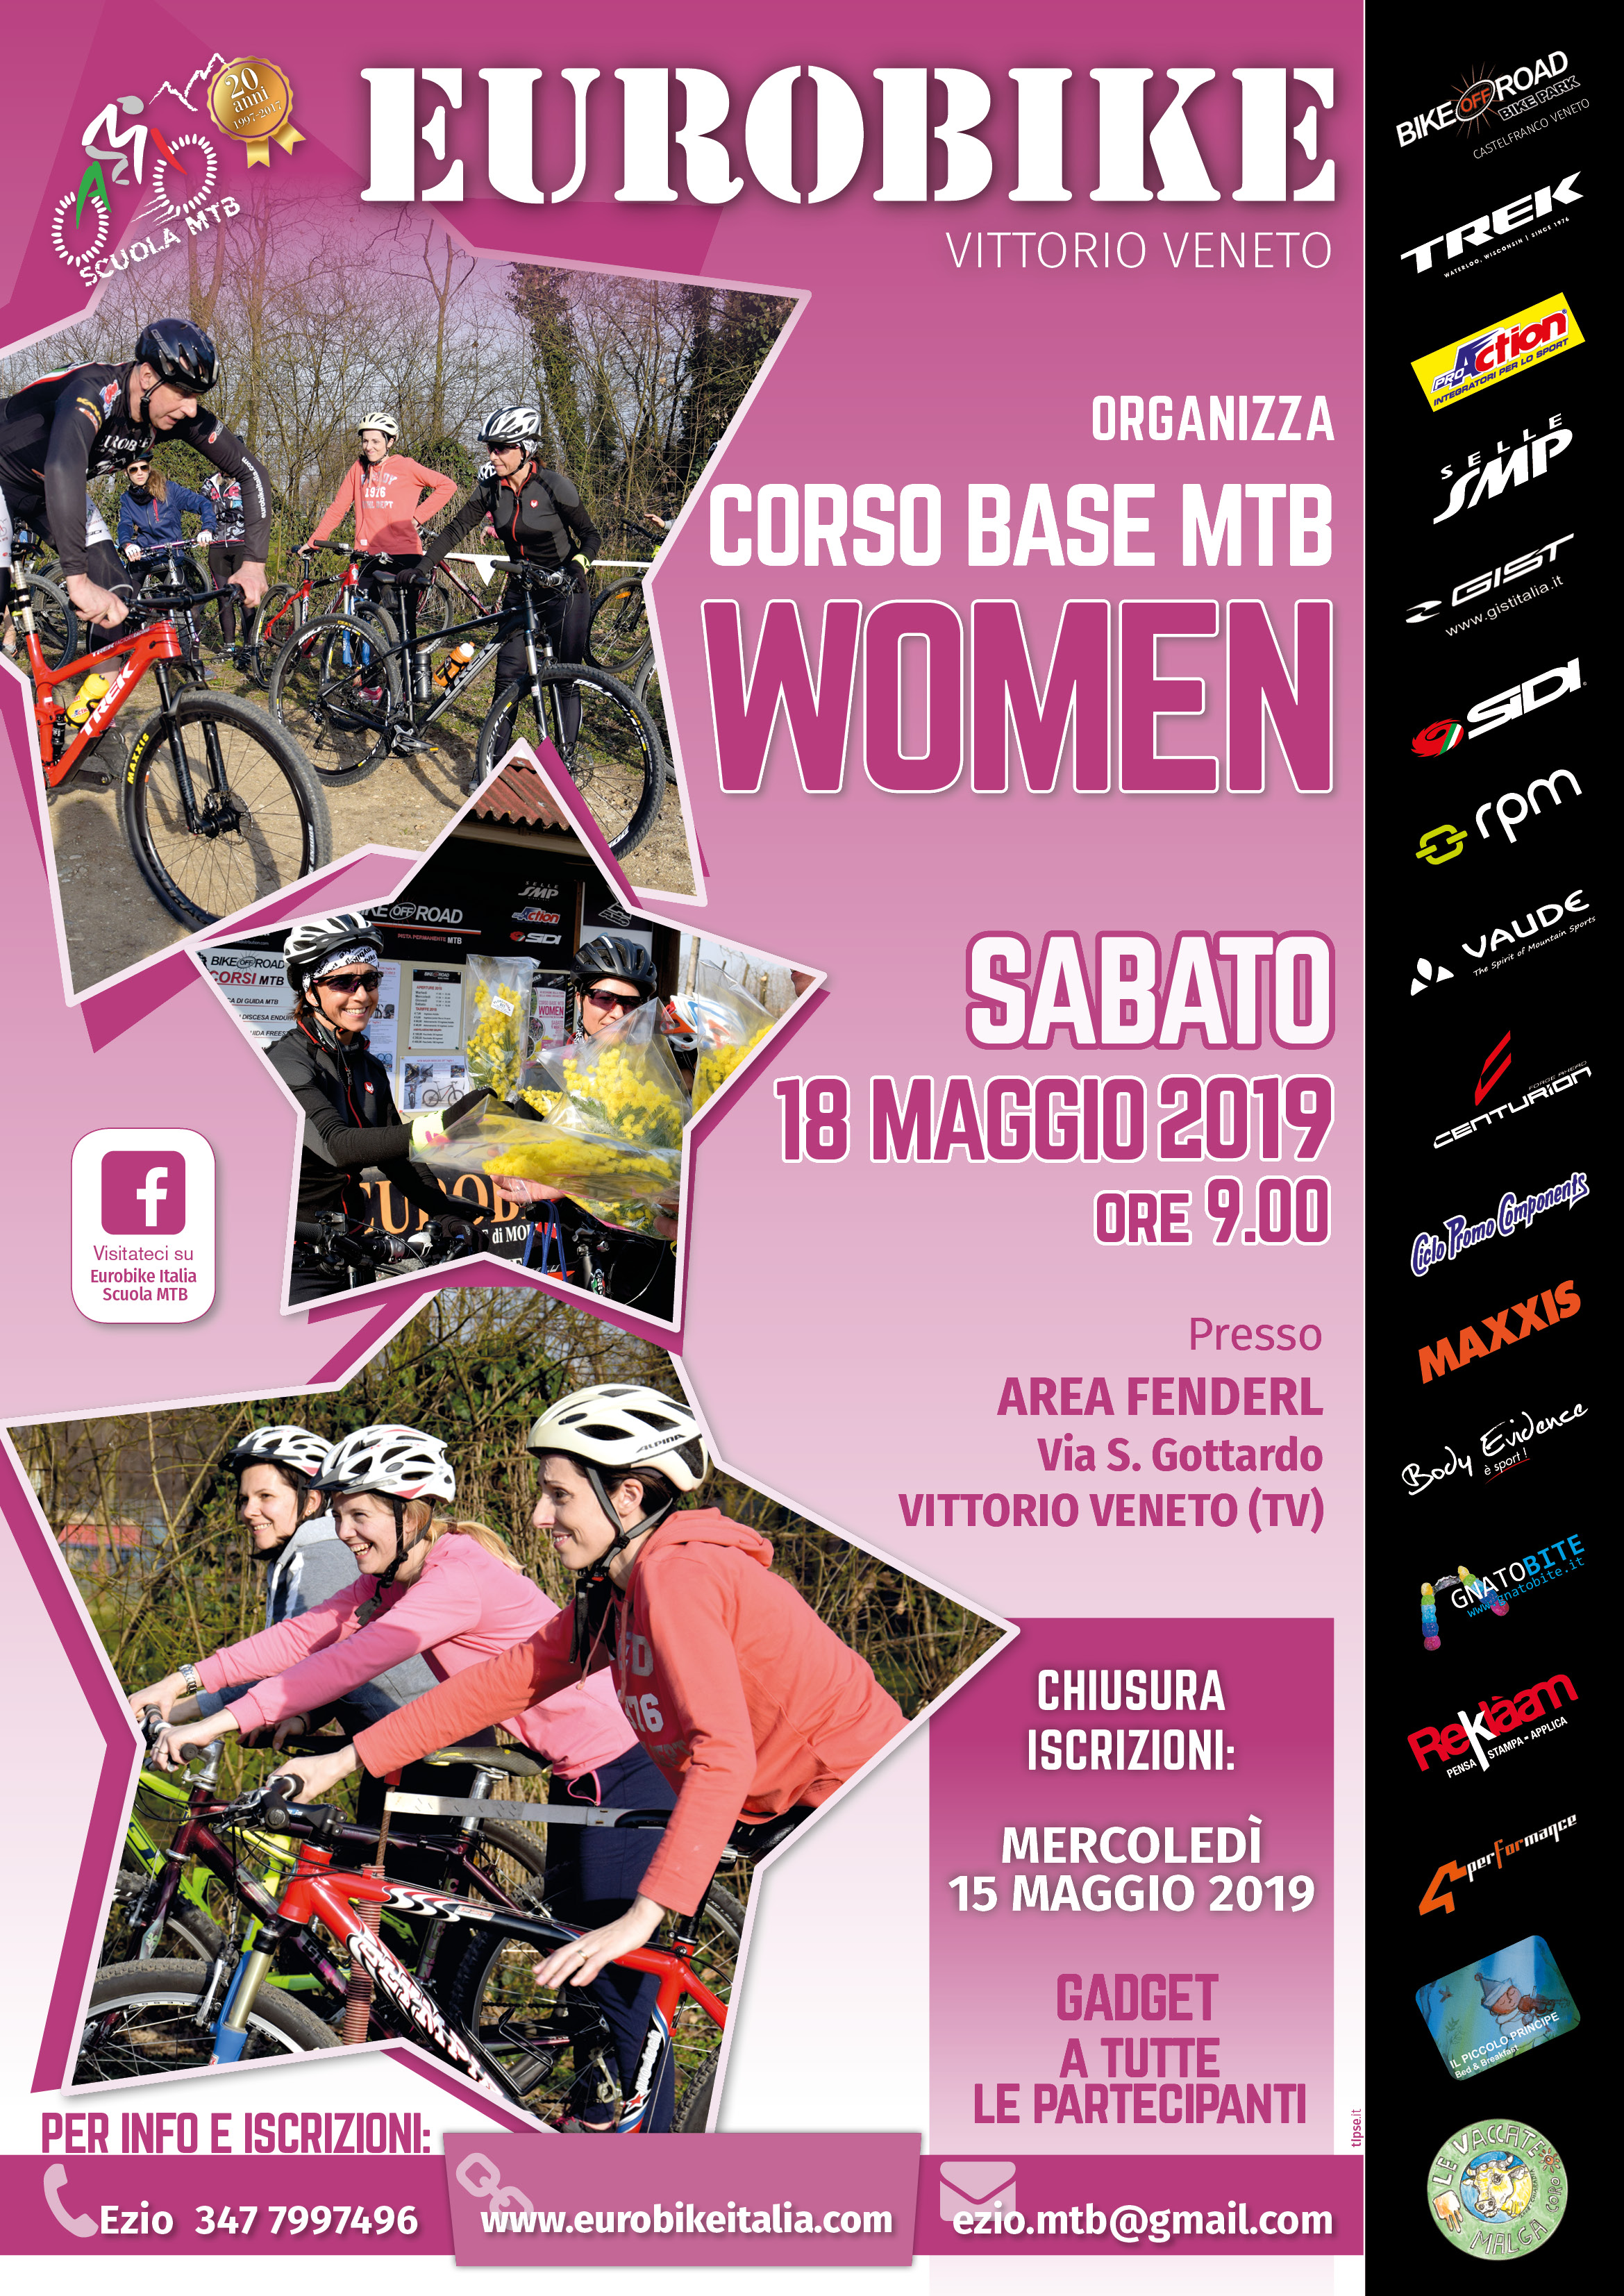 Eurobike CORSO BASE WOMAN 2019 Vittorio Veneto